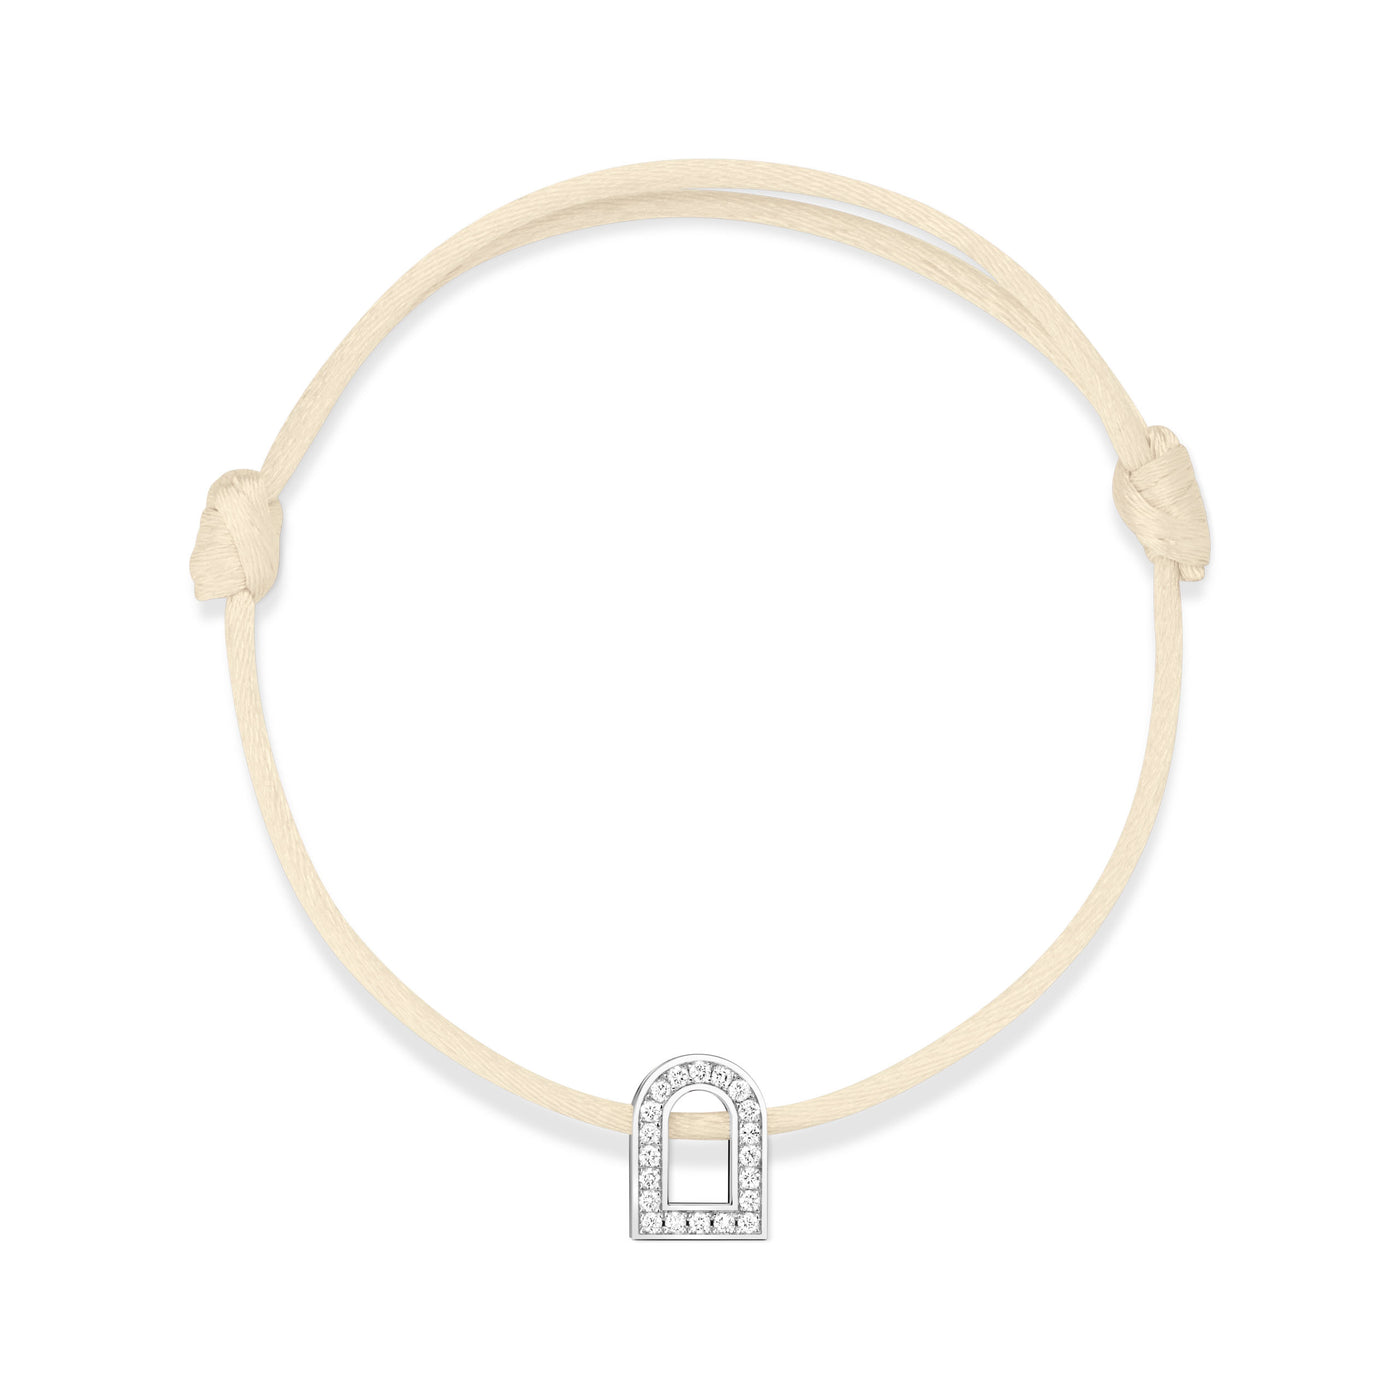 L'Arc Voyage Charm PM, 18k White Gold with Galerie Diamonds on Silk Cord Bracelet - DAVIDOR